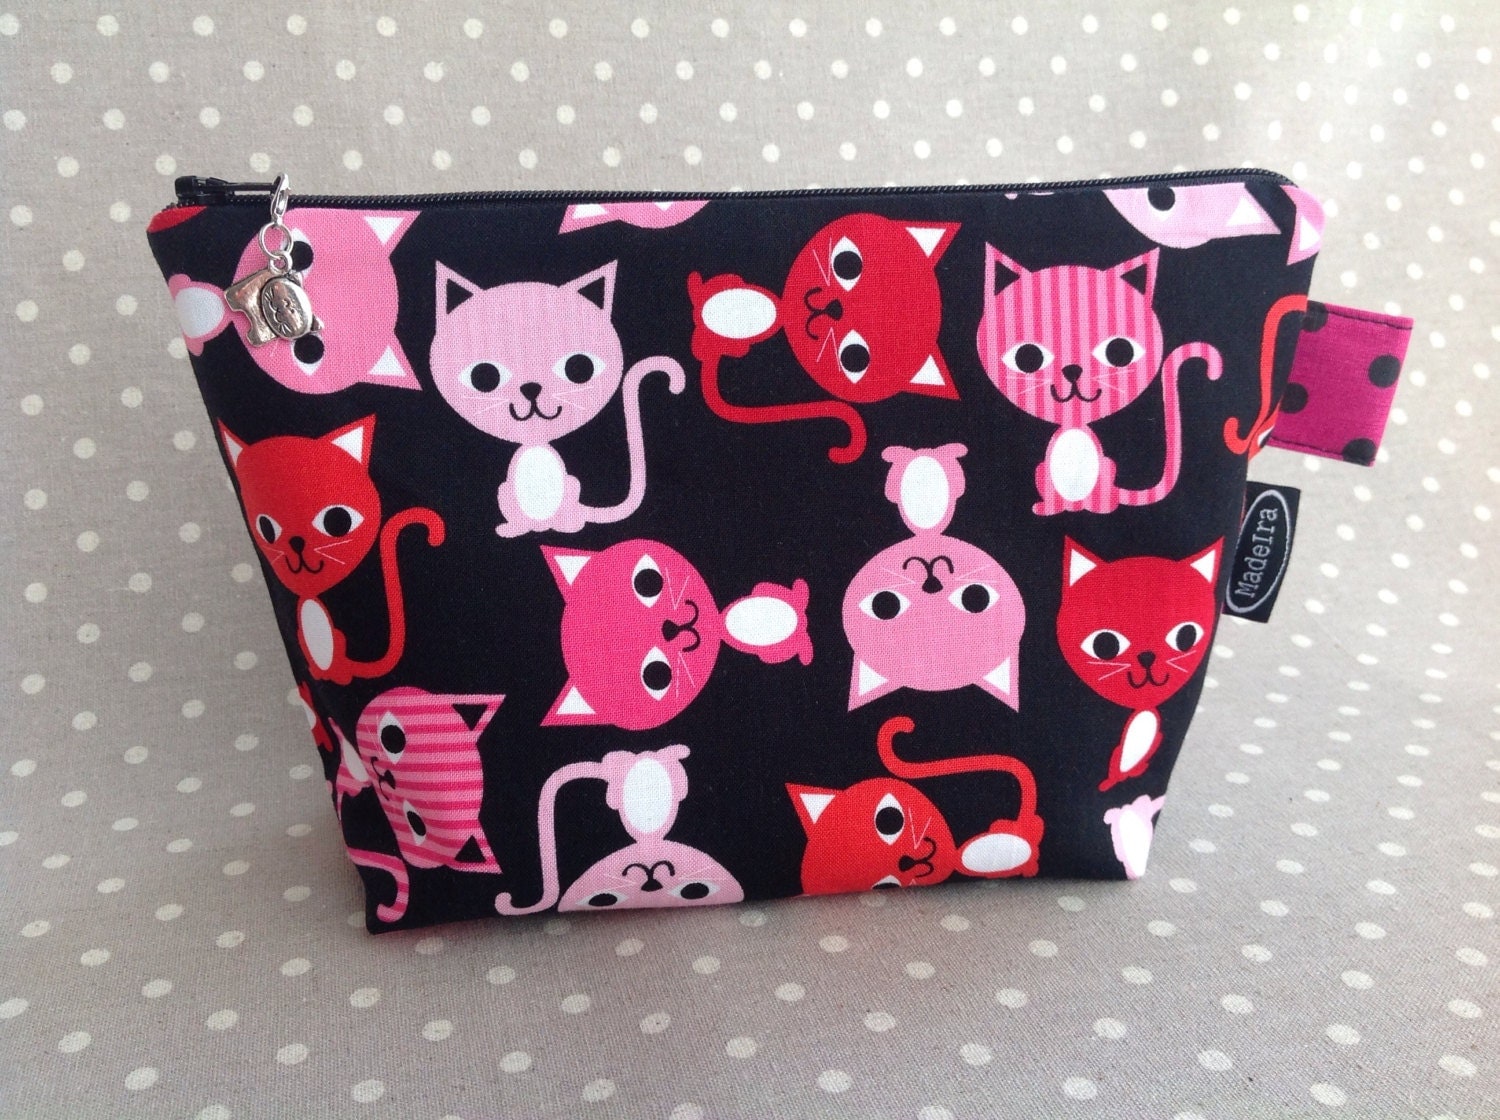 Pink and black cat zipper bag knitting project bag kawaii